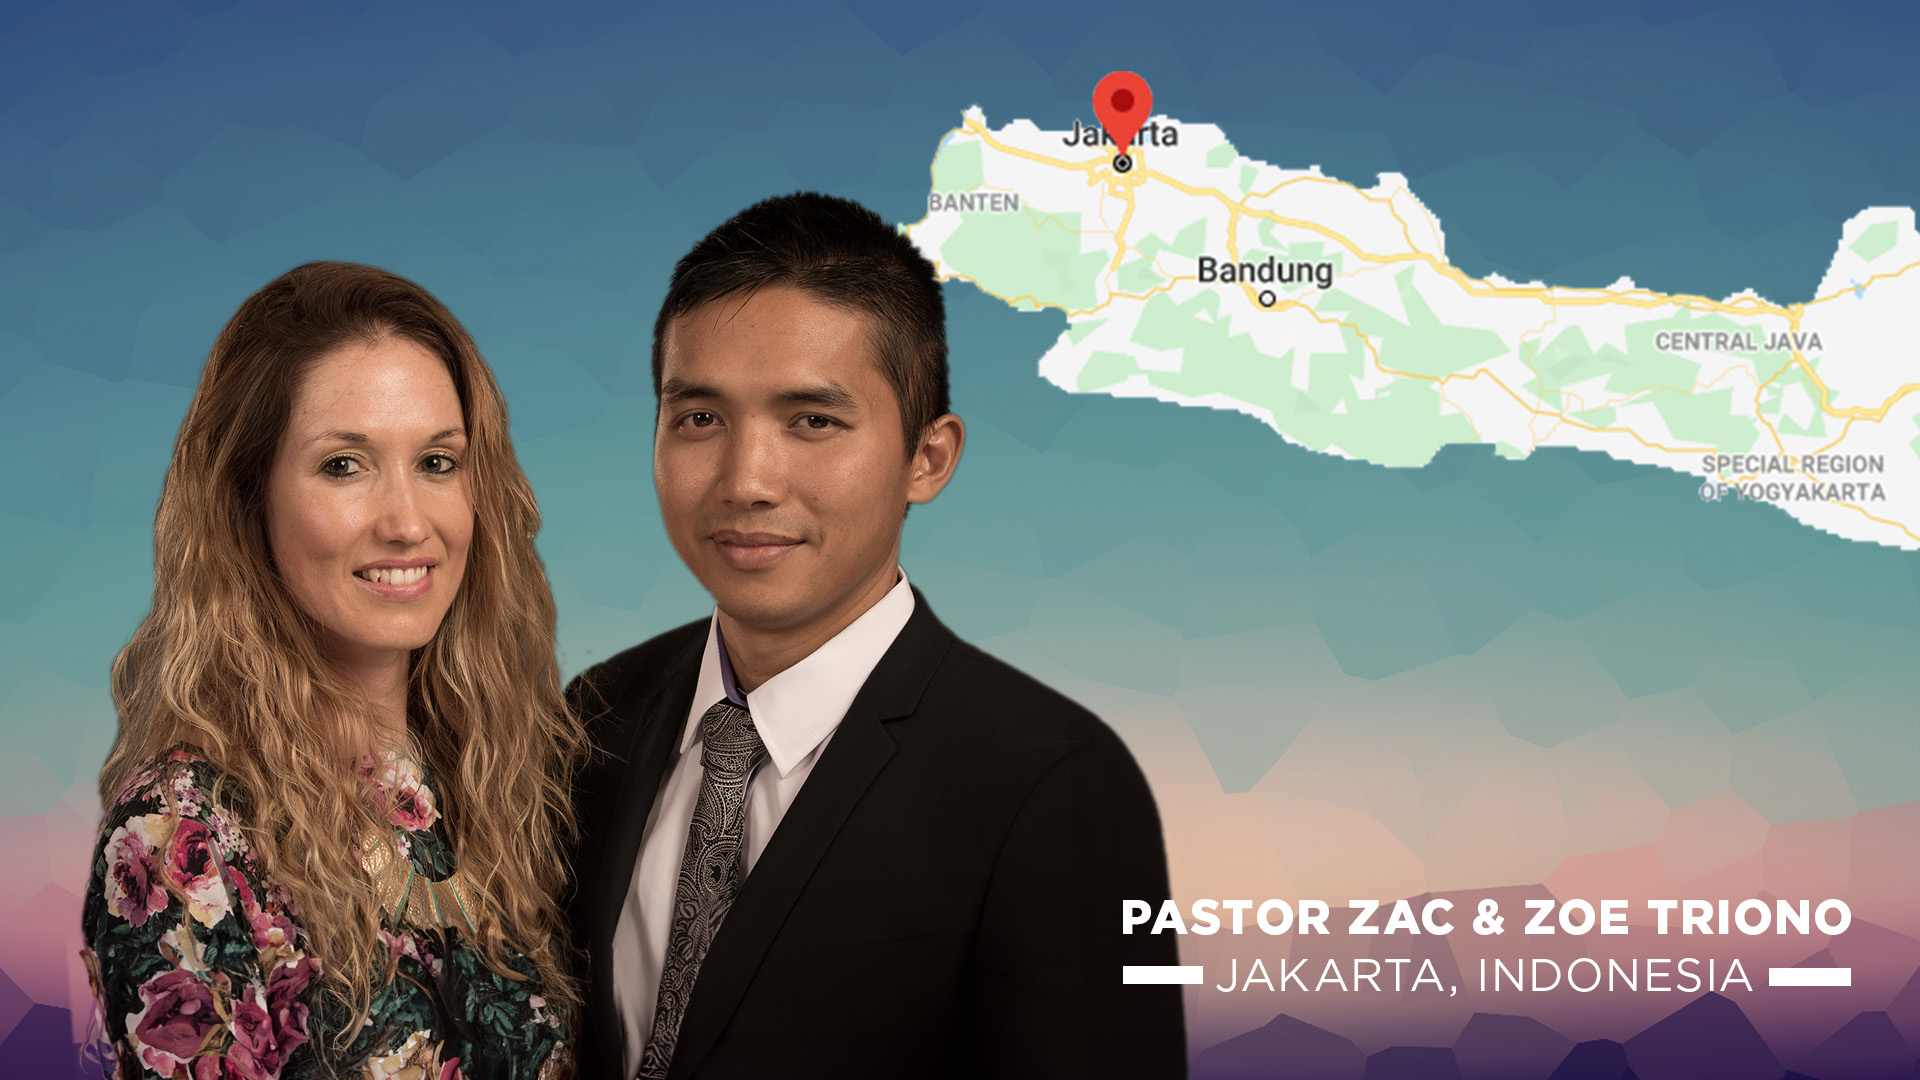 Missionaries-Template aZac & Zoe